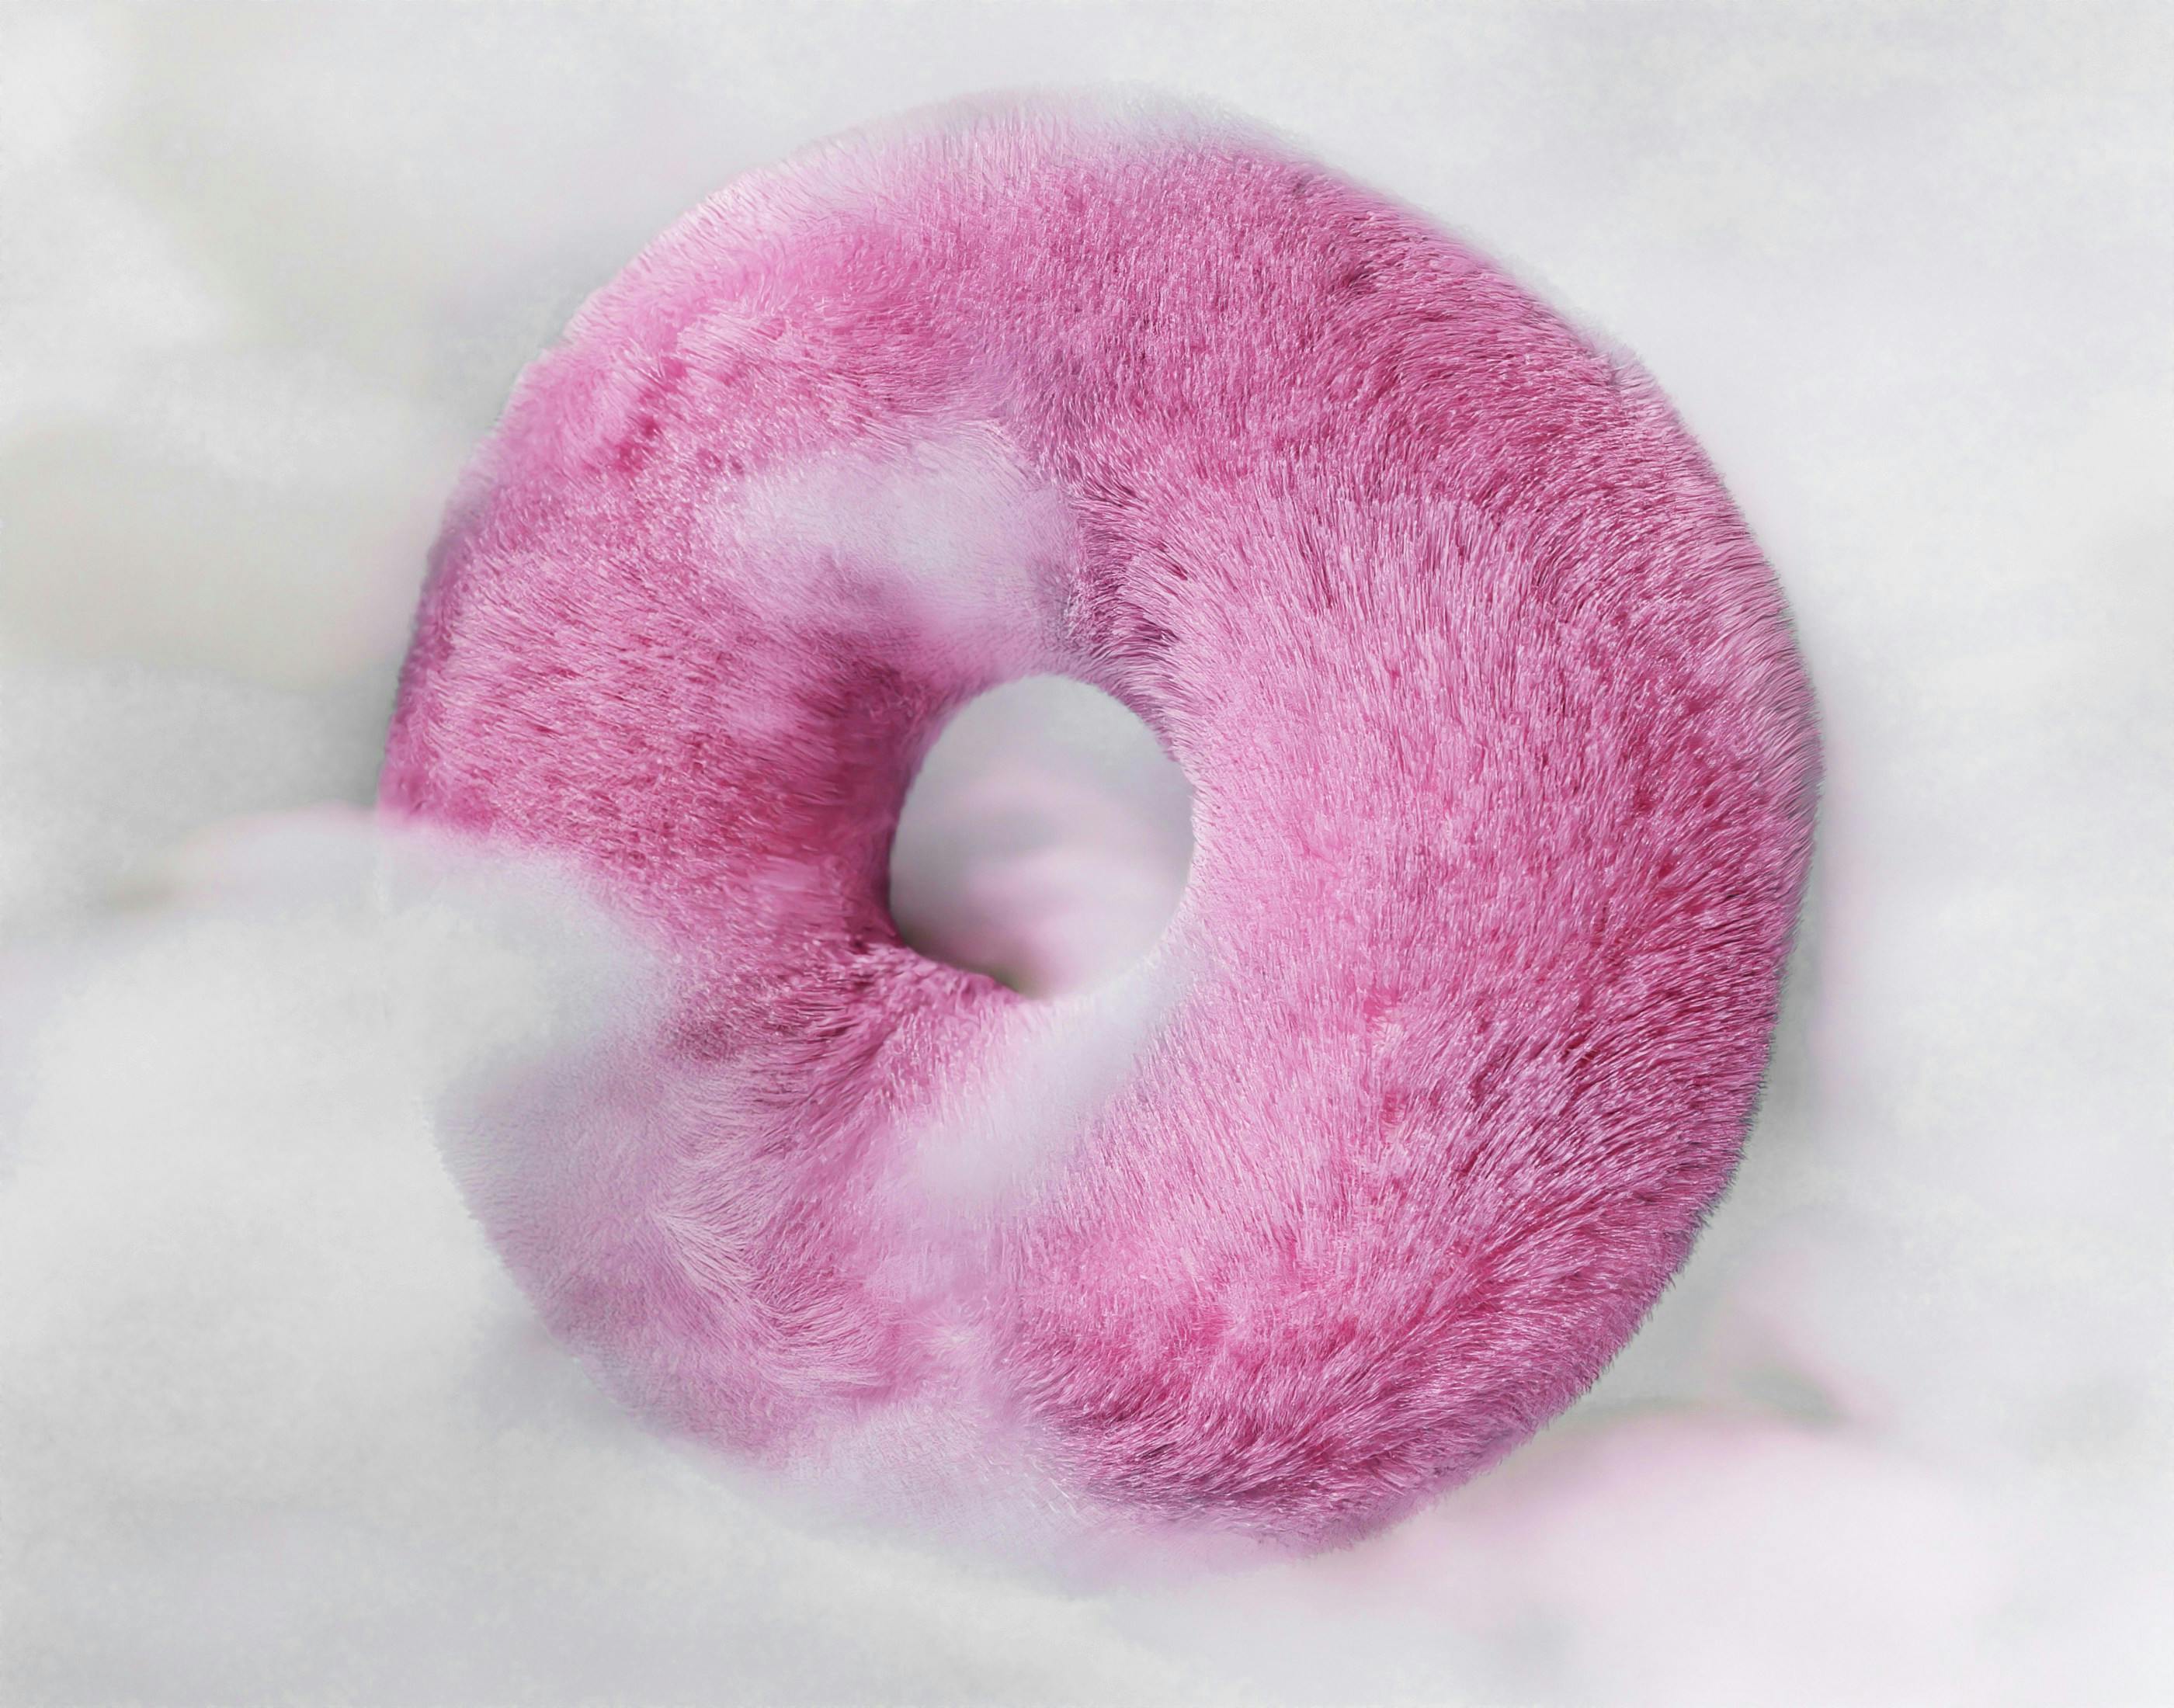 a pink fuzzy object